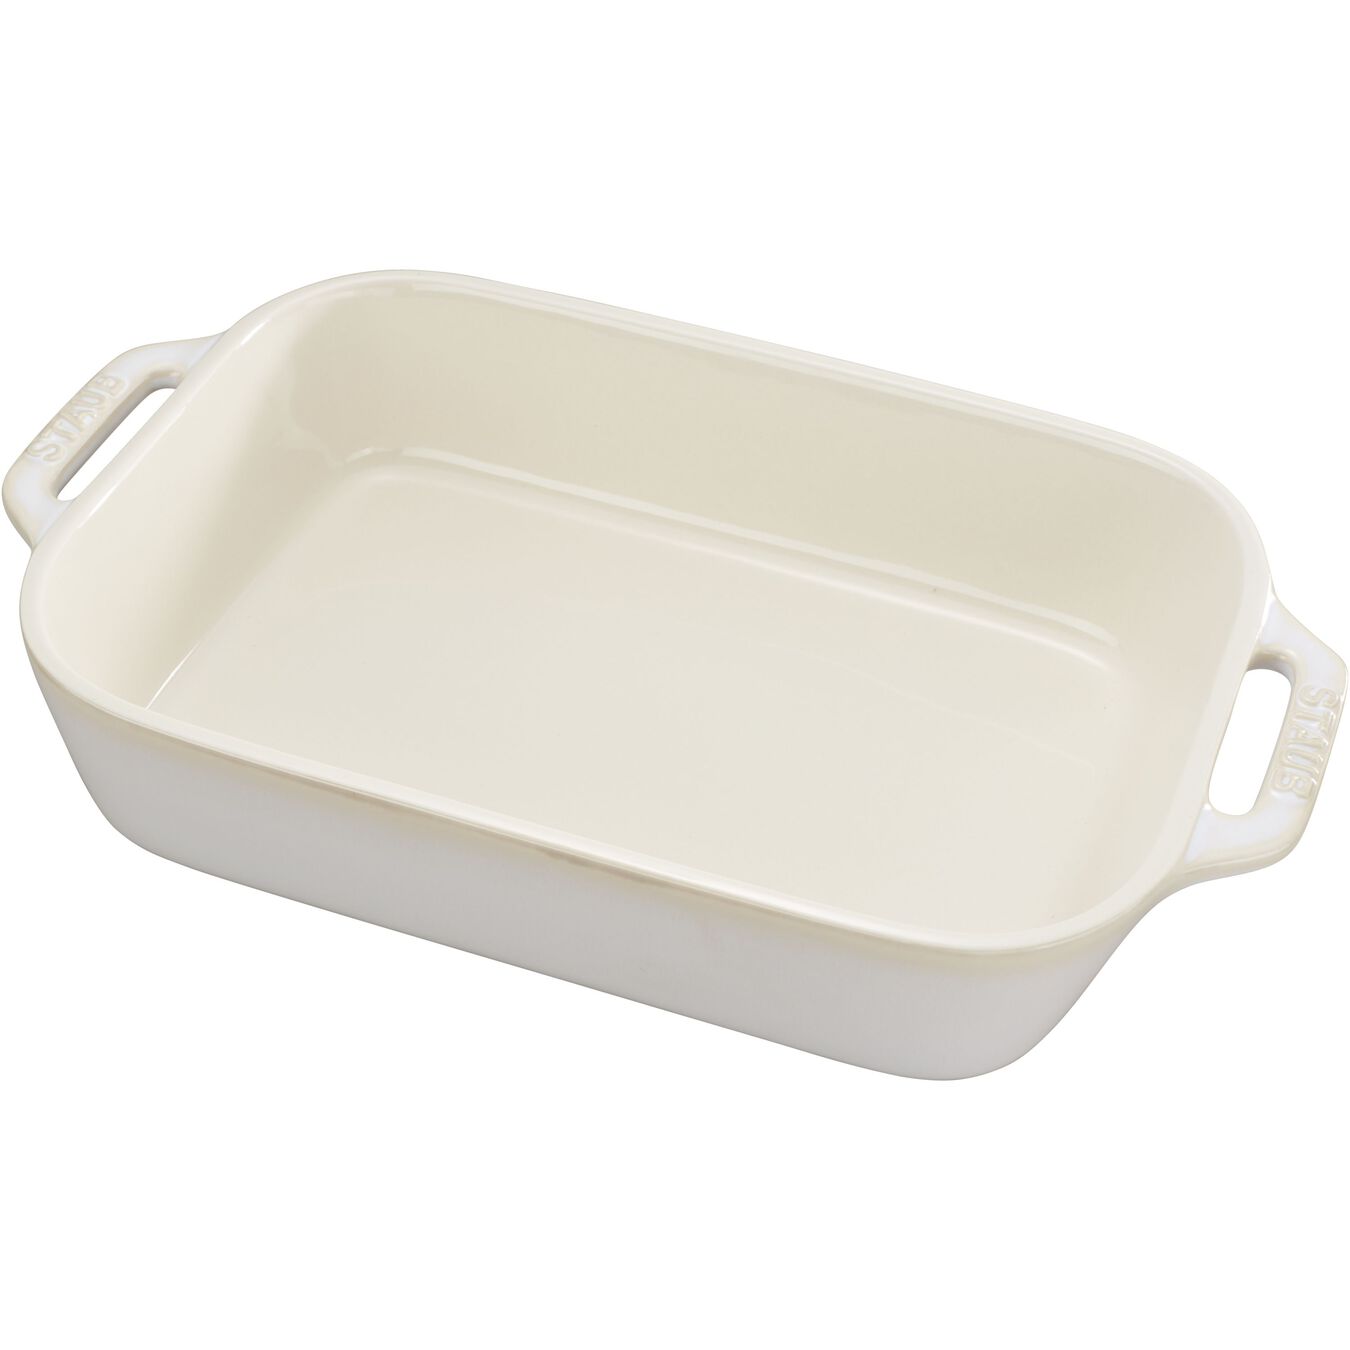 32 cm x 20 cm rectangular Ceramic Oven dish ivory-white,,large 2